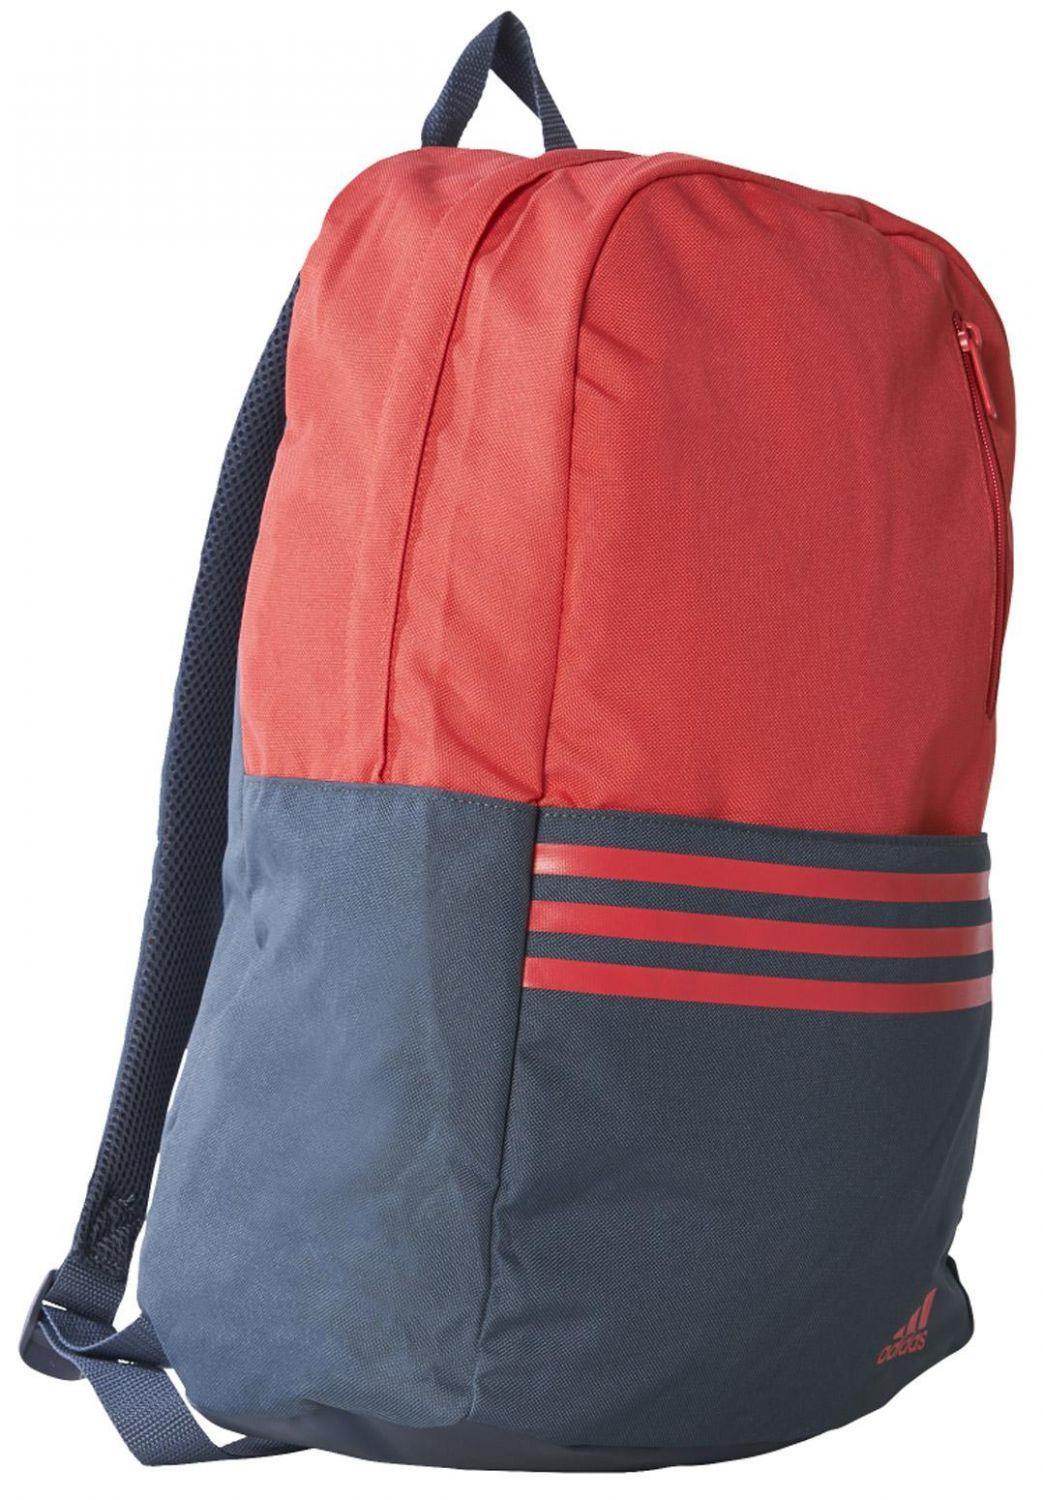 adidas Versatile Backpack Rucksack (joy s13/utility blue f16/joy s13) von Adidas